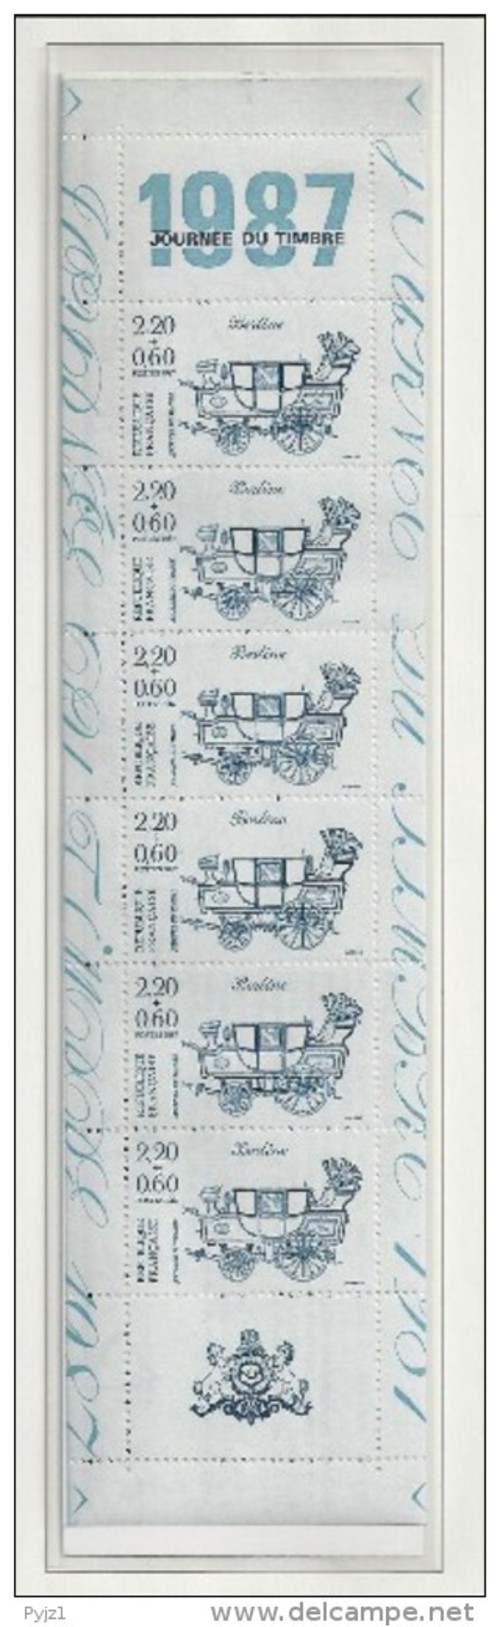 1987  MNH France Carnet/booklet, Postfris - Dag Van De Postzegel